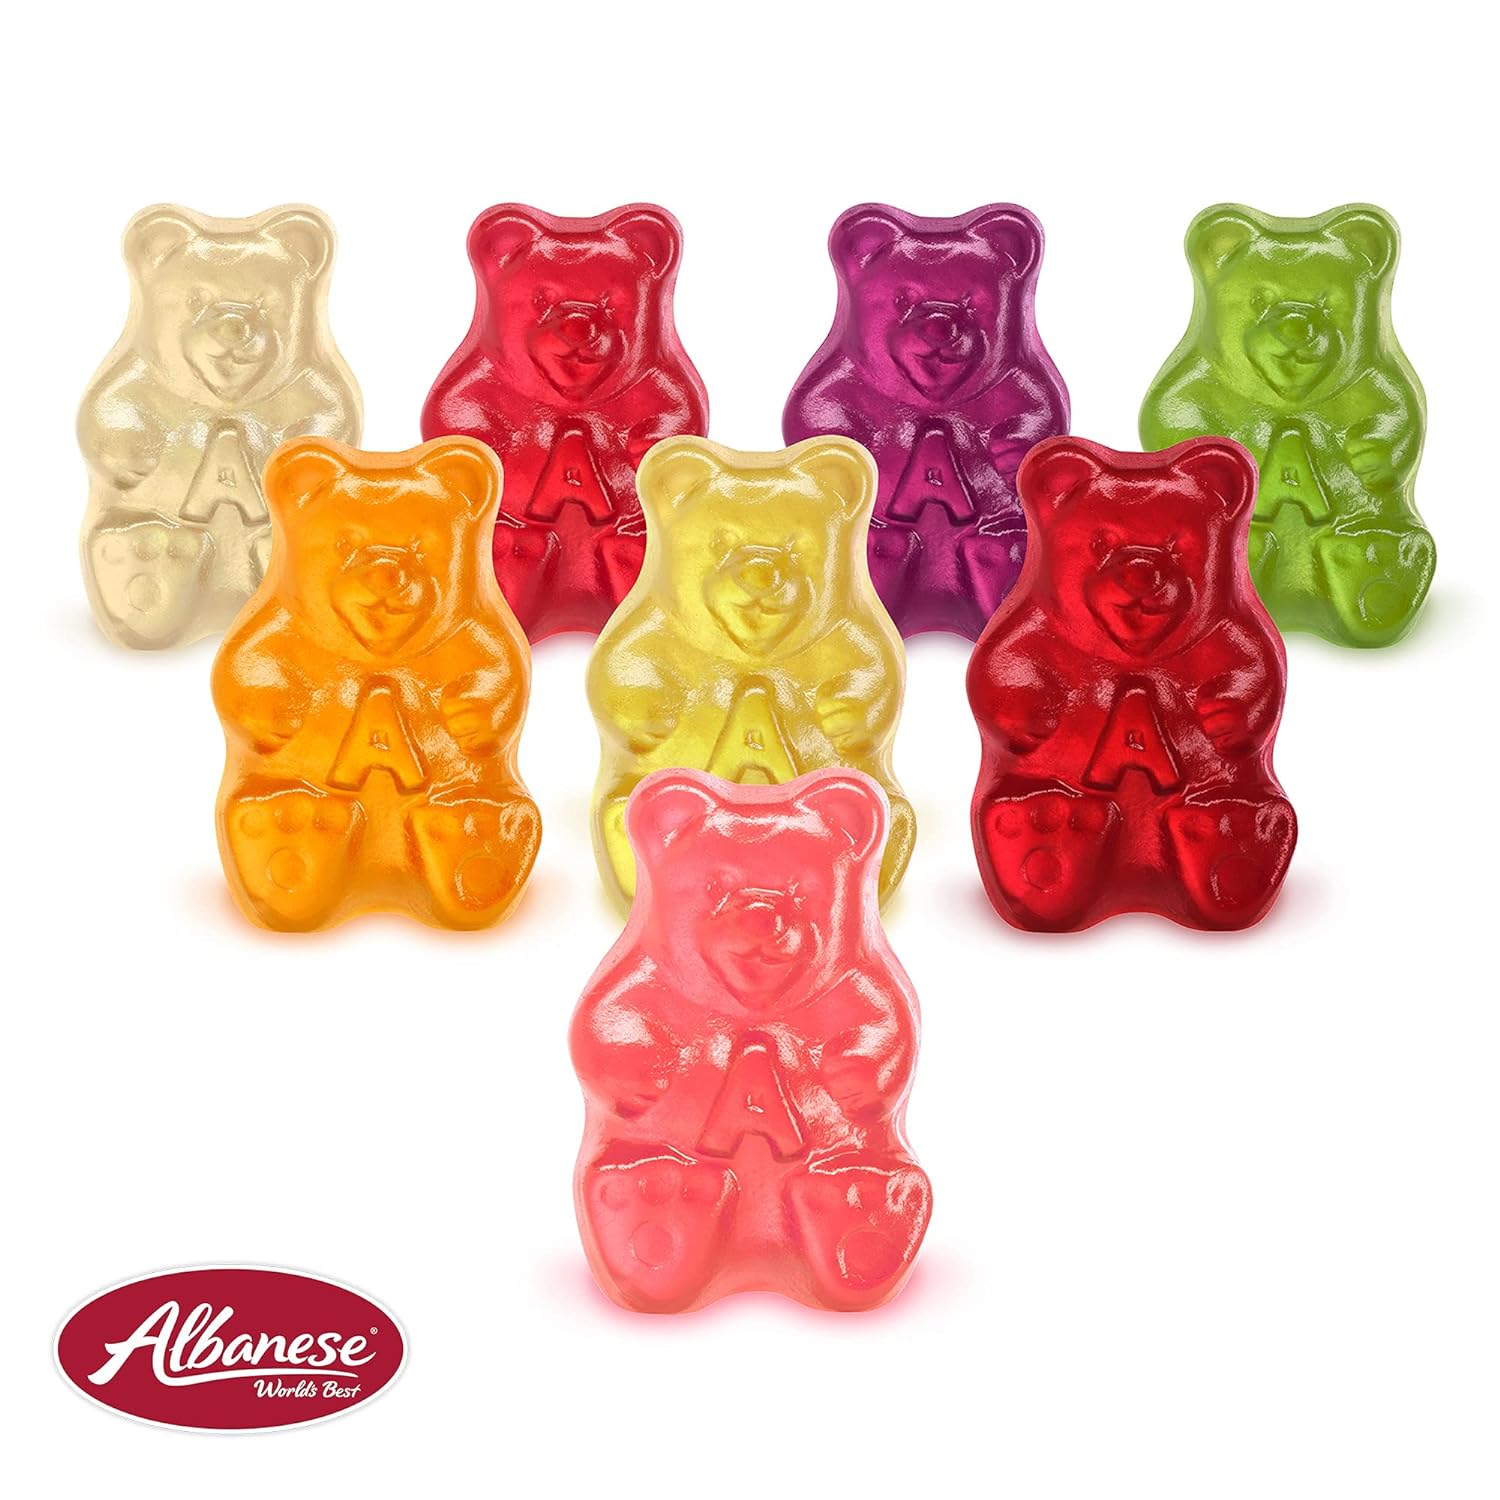 Albanese World's Best Ultimate 8 Flavor Gummi Bears, 25oz Bag of Easter Candy, Great Easter Basket Stuffers